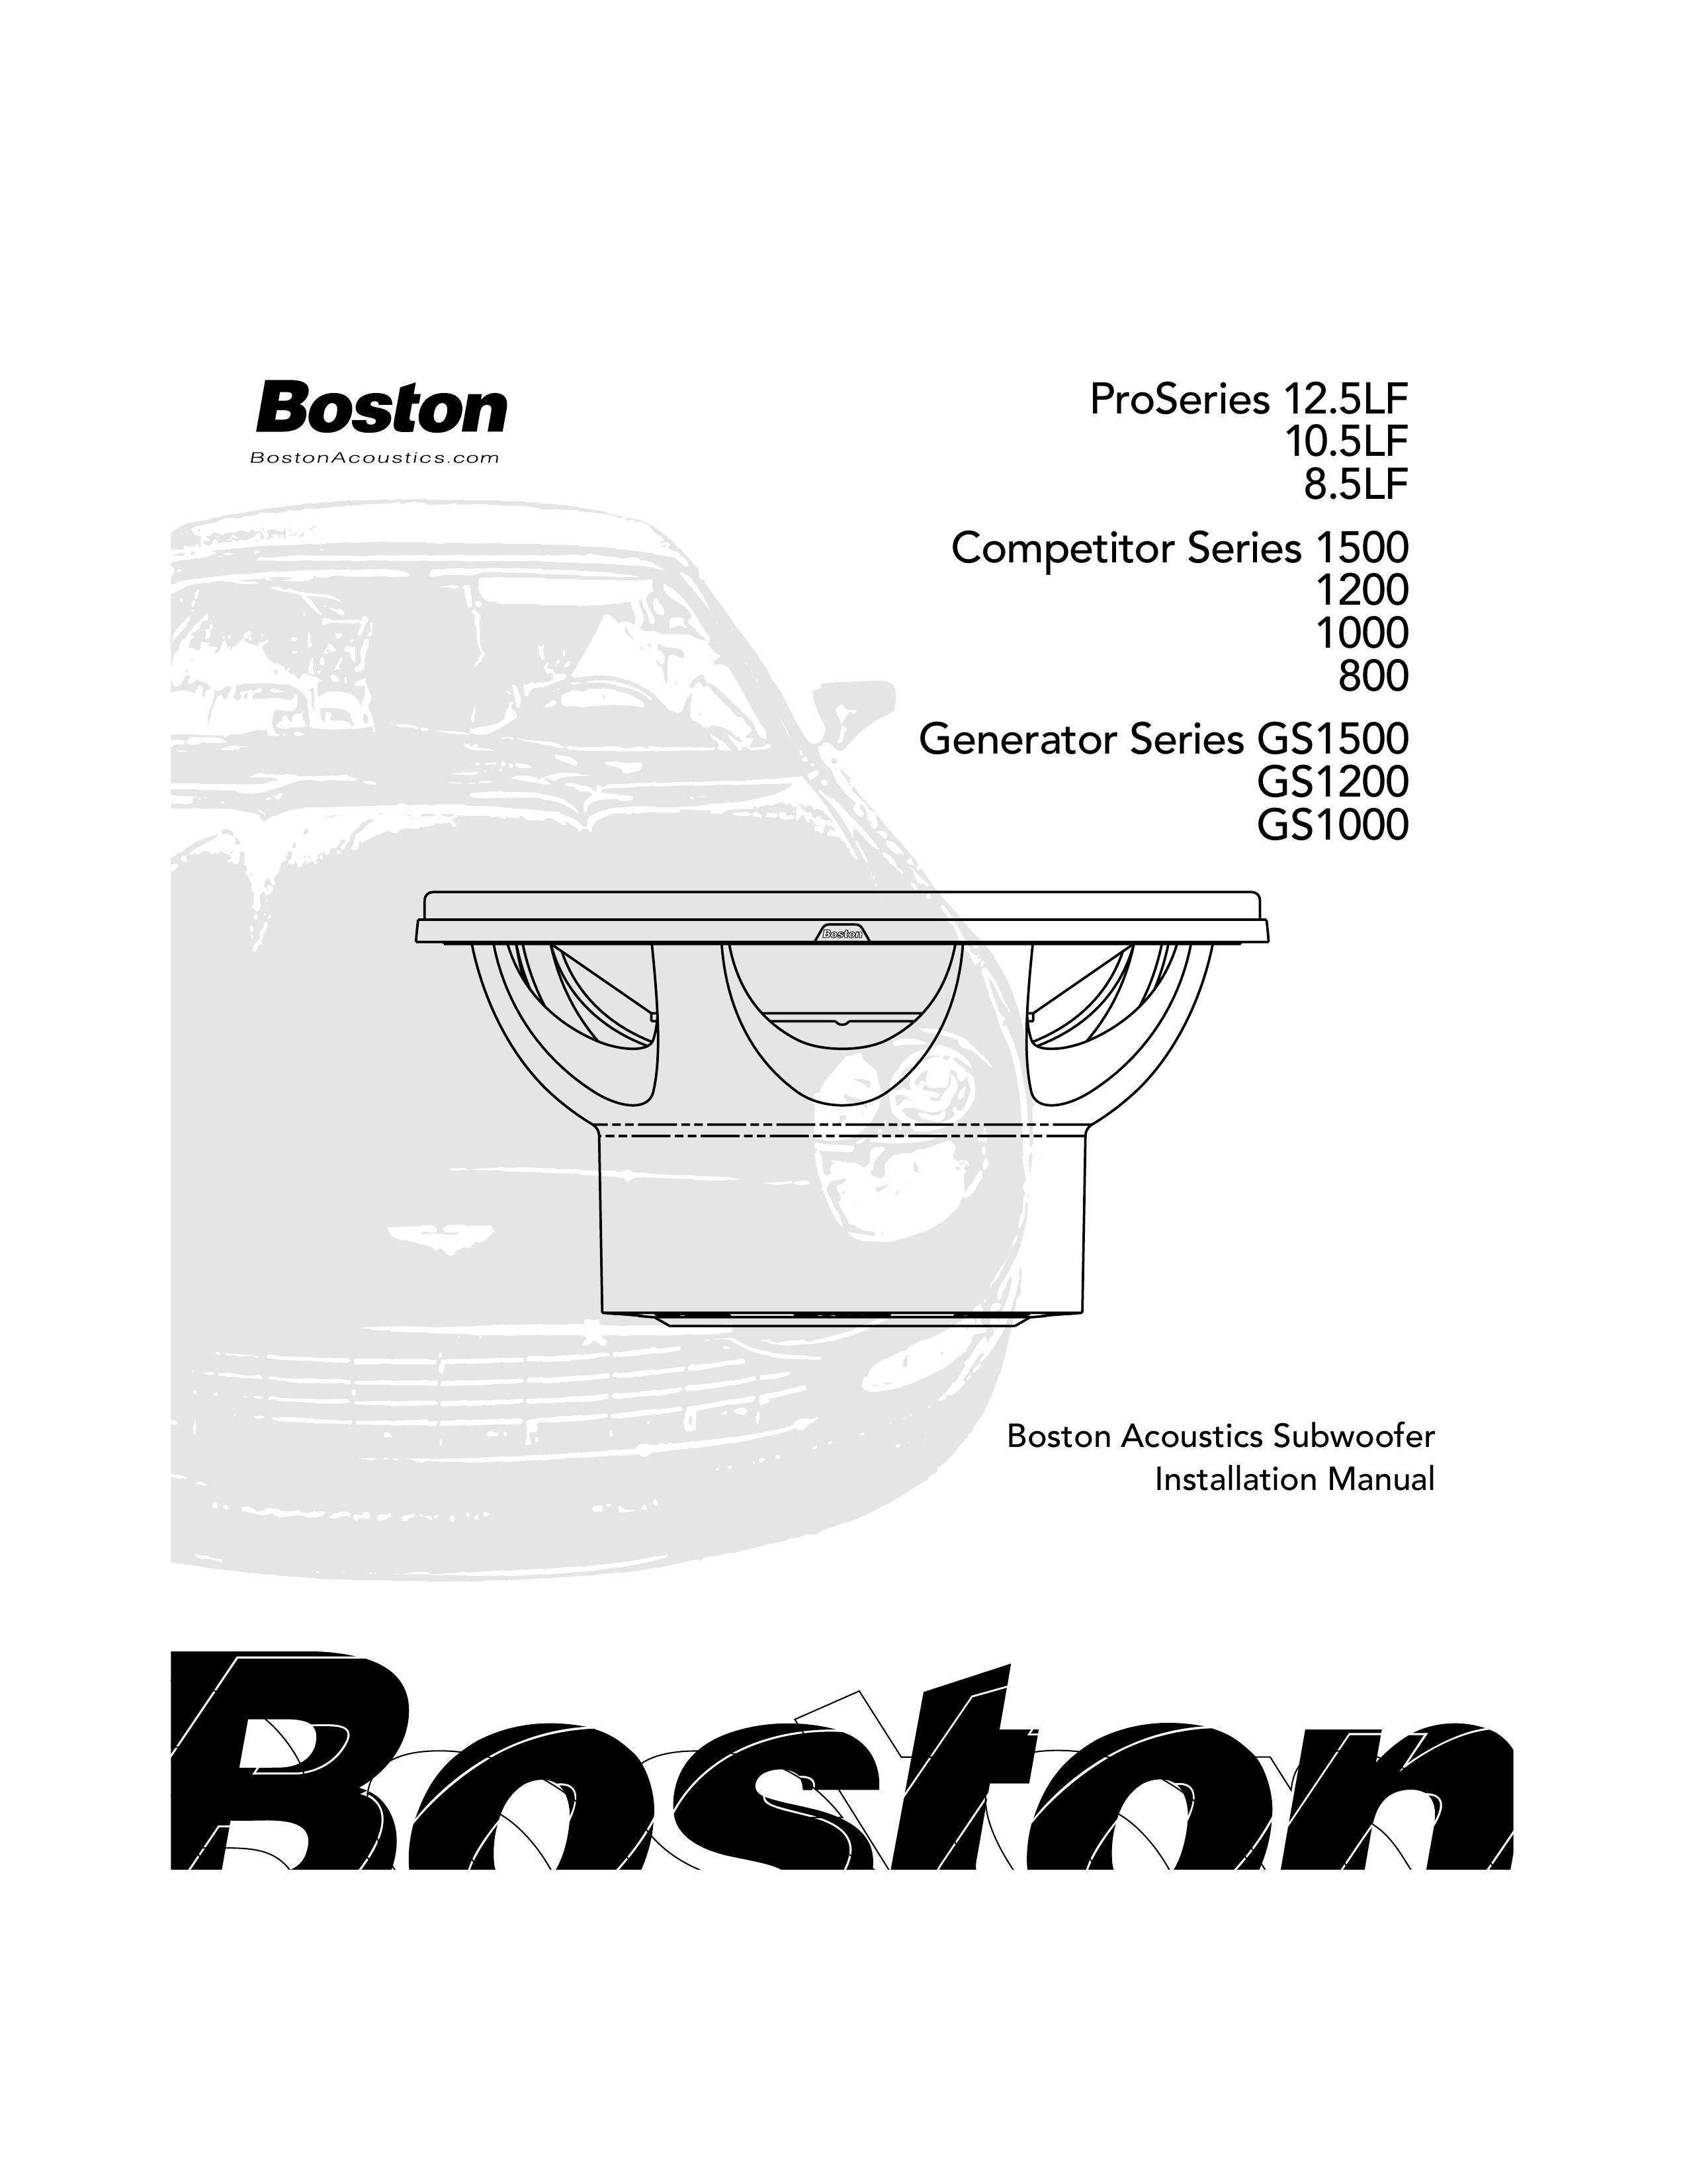 Boston Acoustics 8.5LF Recording Equipment User Manual